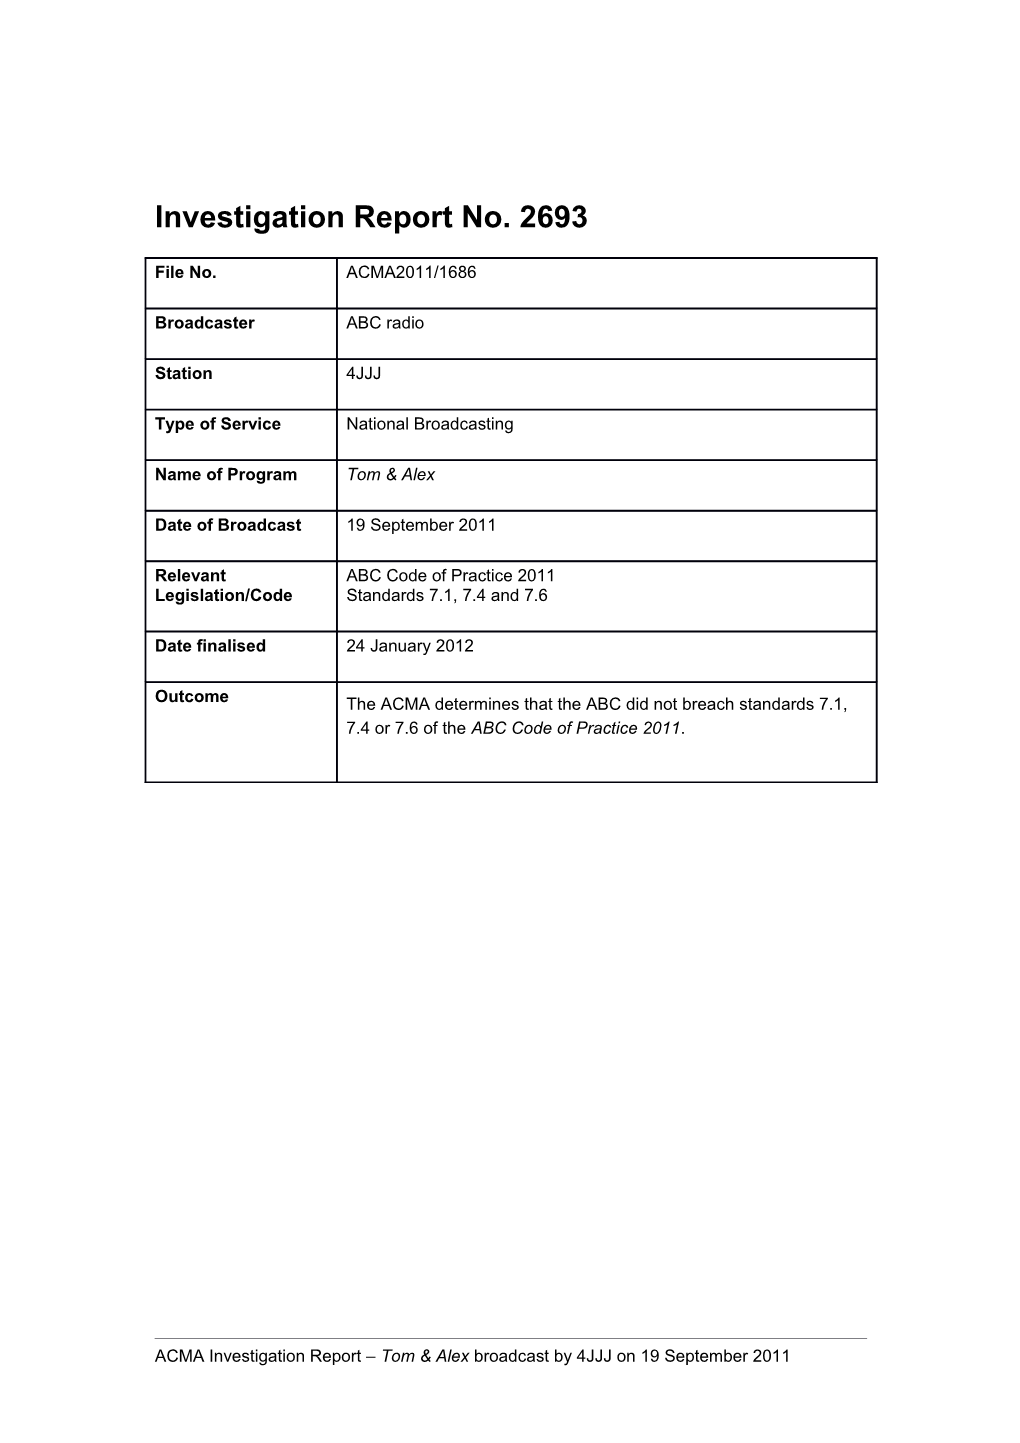 4JJJ - AMA Investigation Report 2693